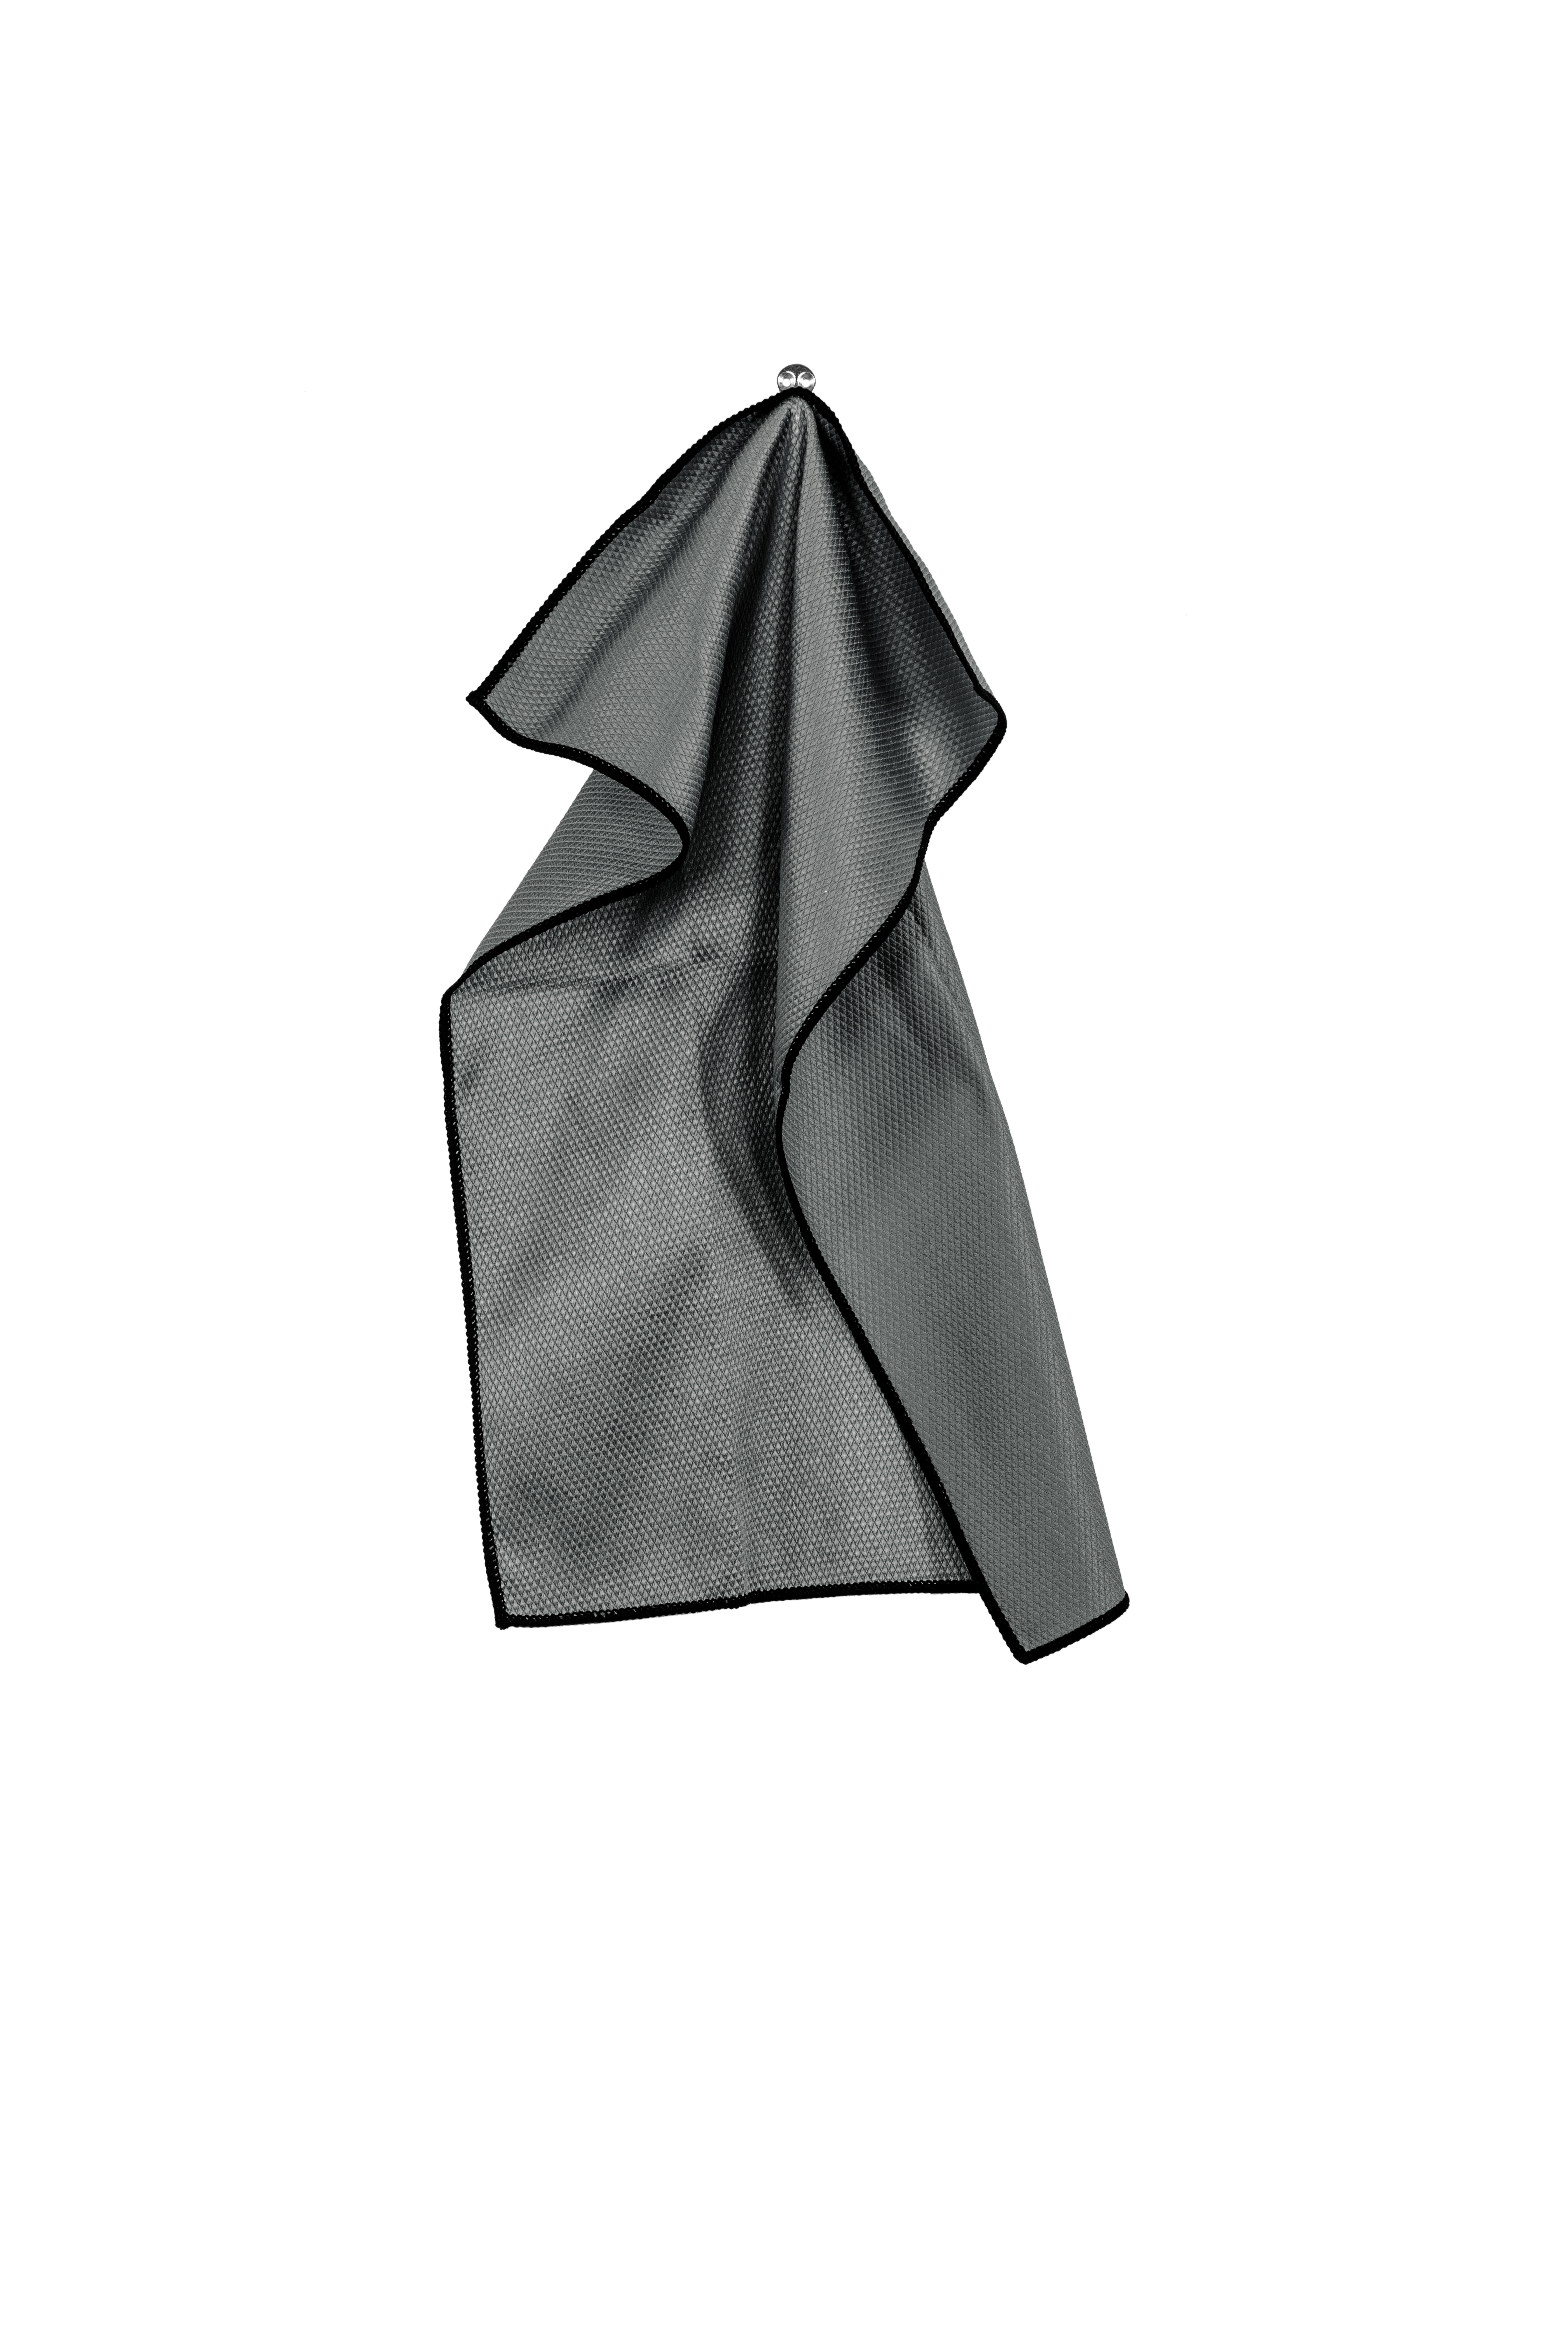 Glass-cloth ESSENTIAL - microfiber 40x60cm (per piece), dark grey